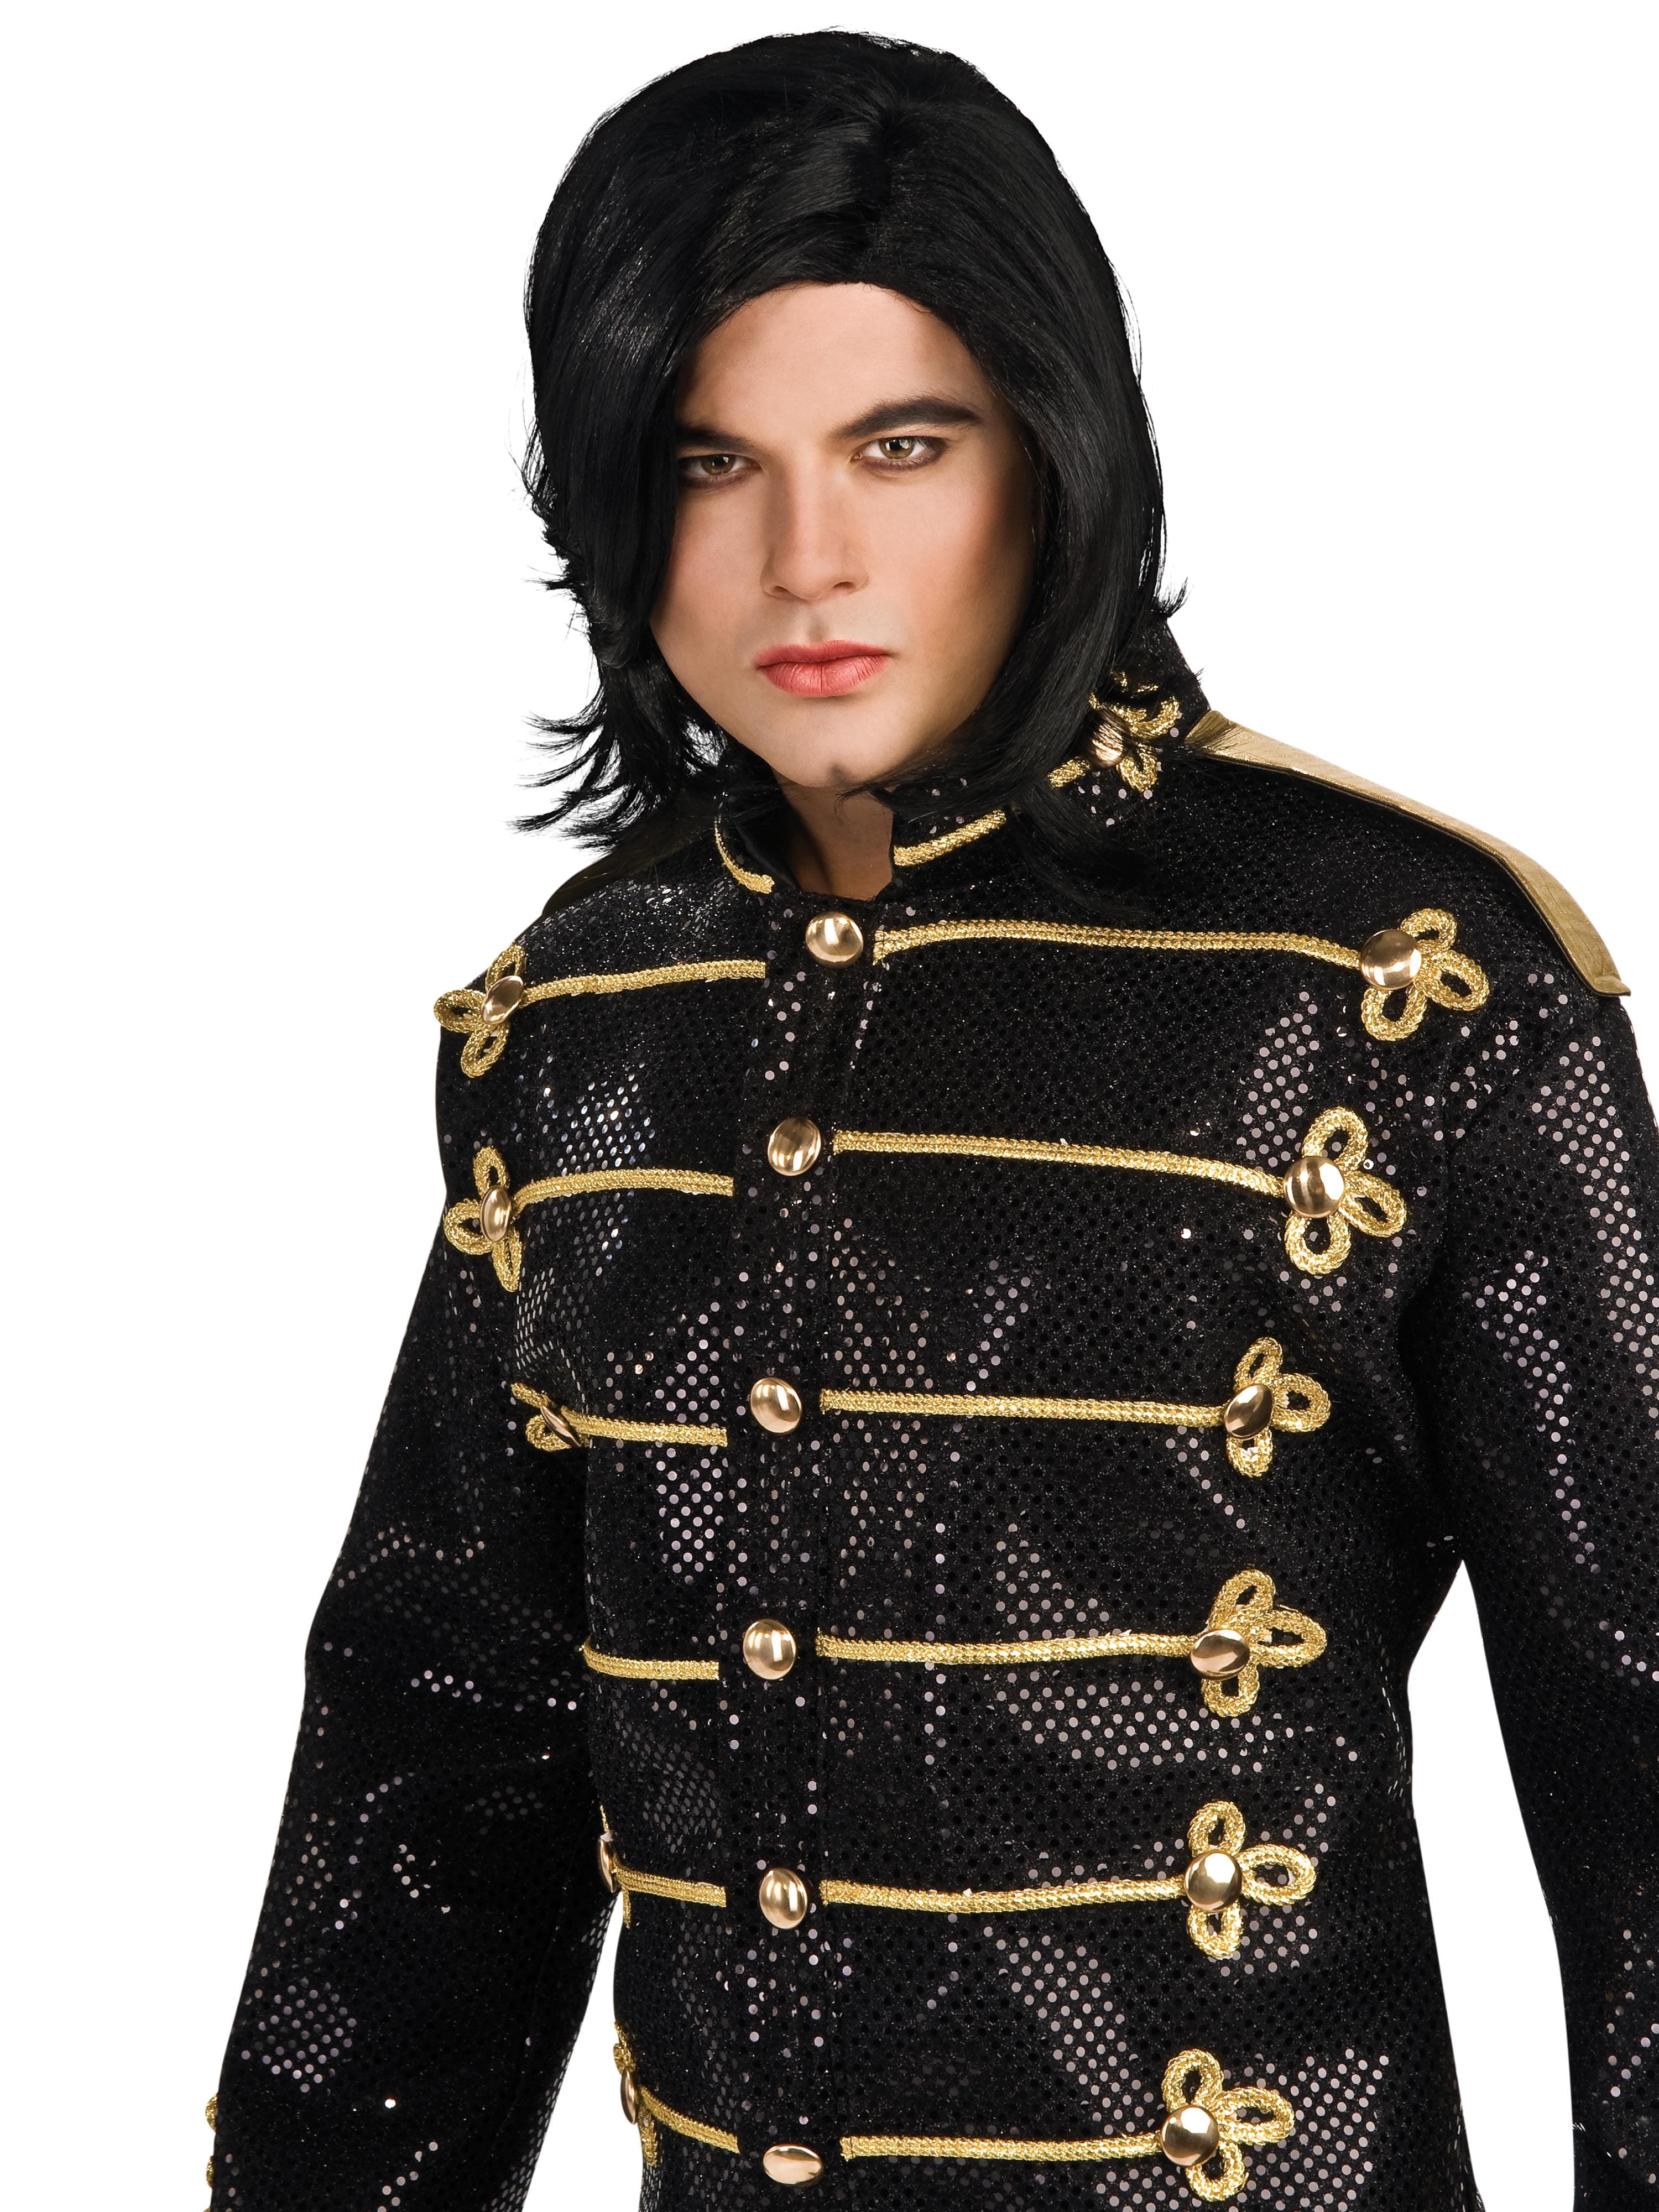 Adult Michael Jackson Straight Black Wig - costumes.com